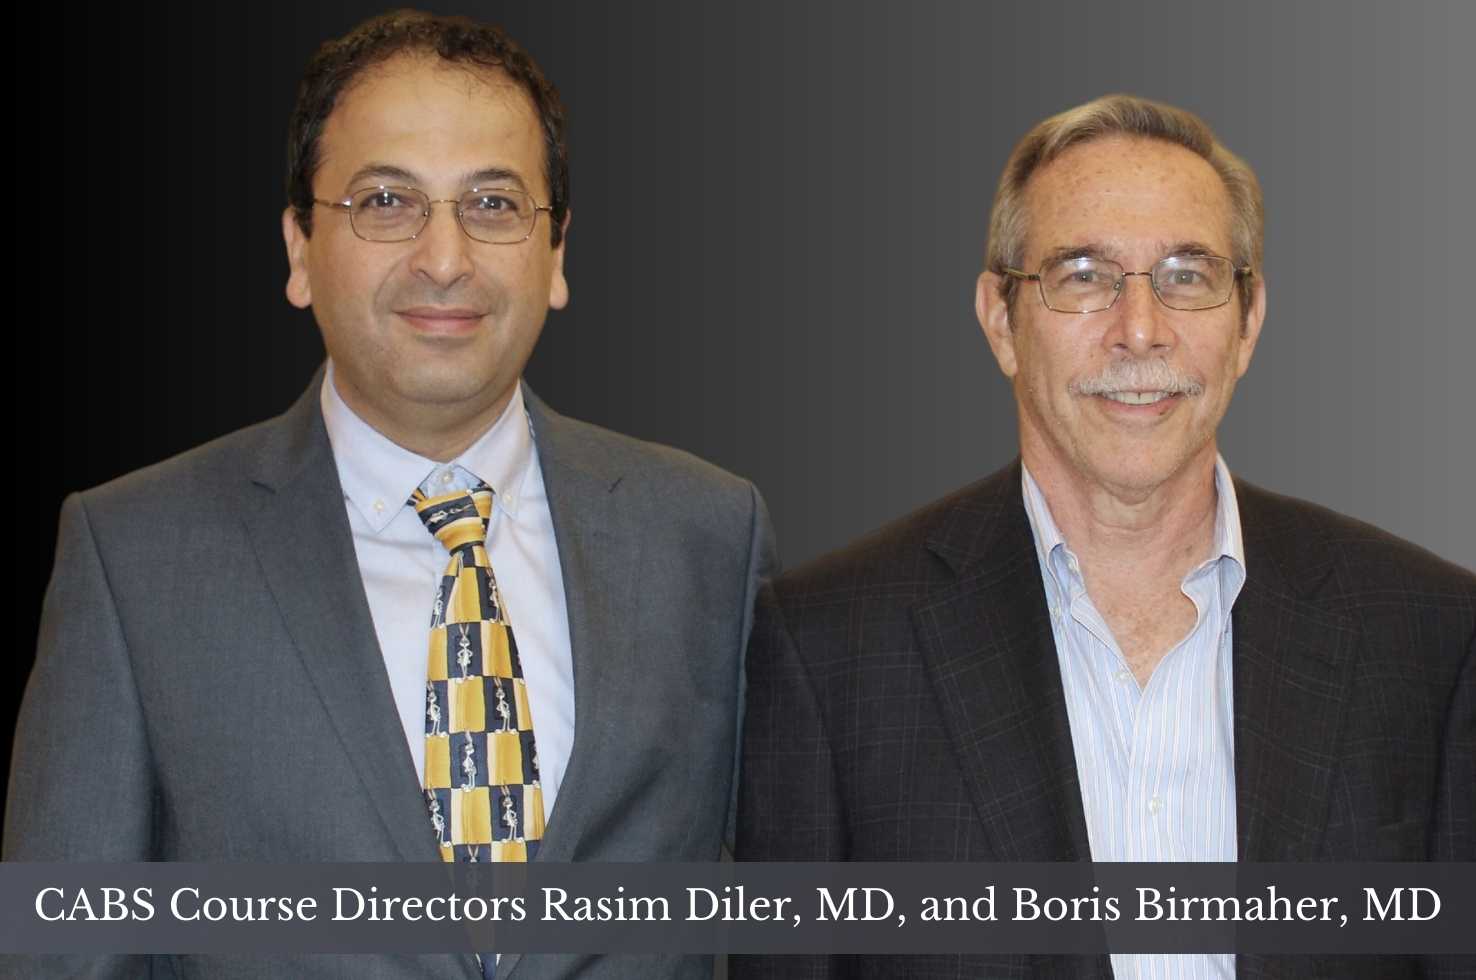 Rasim Diler, MD and Boris Birmaher, MD